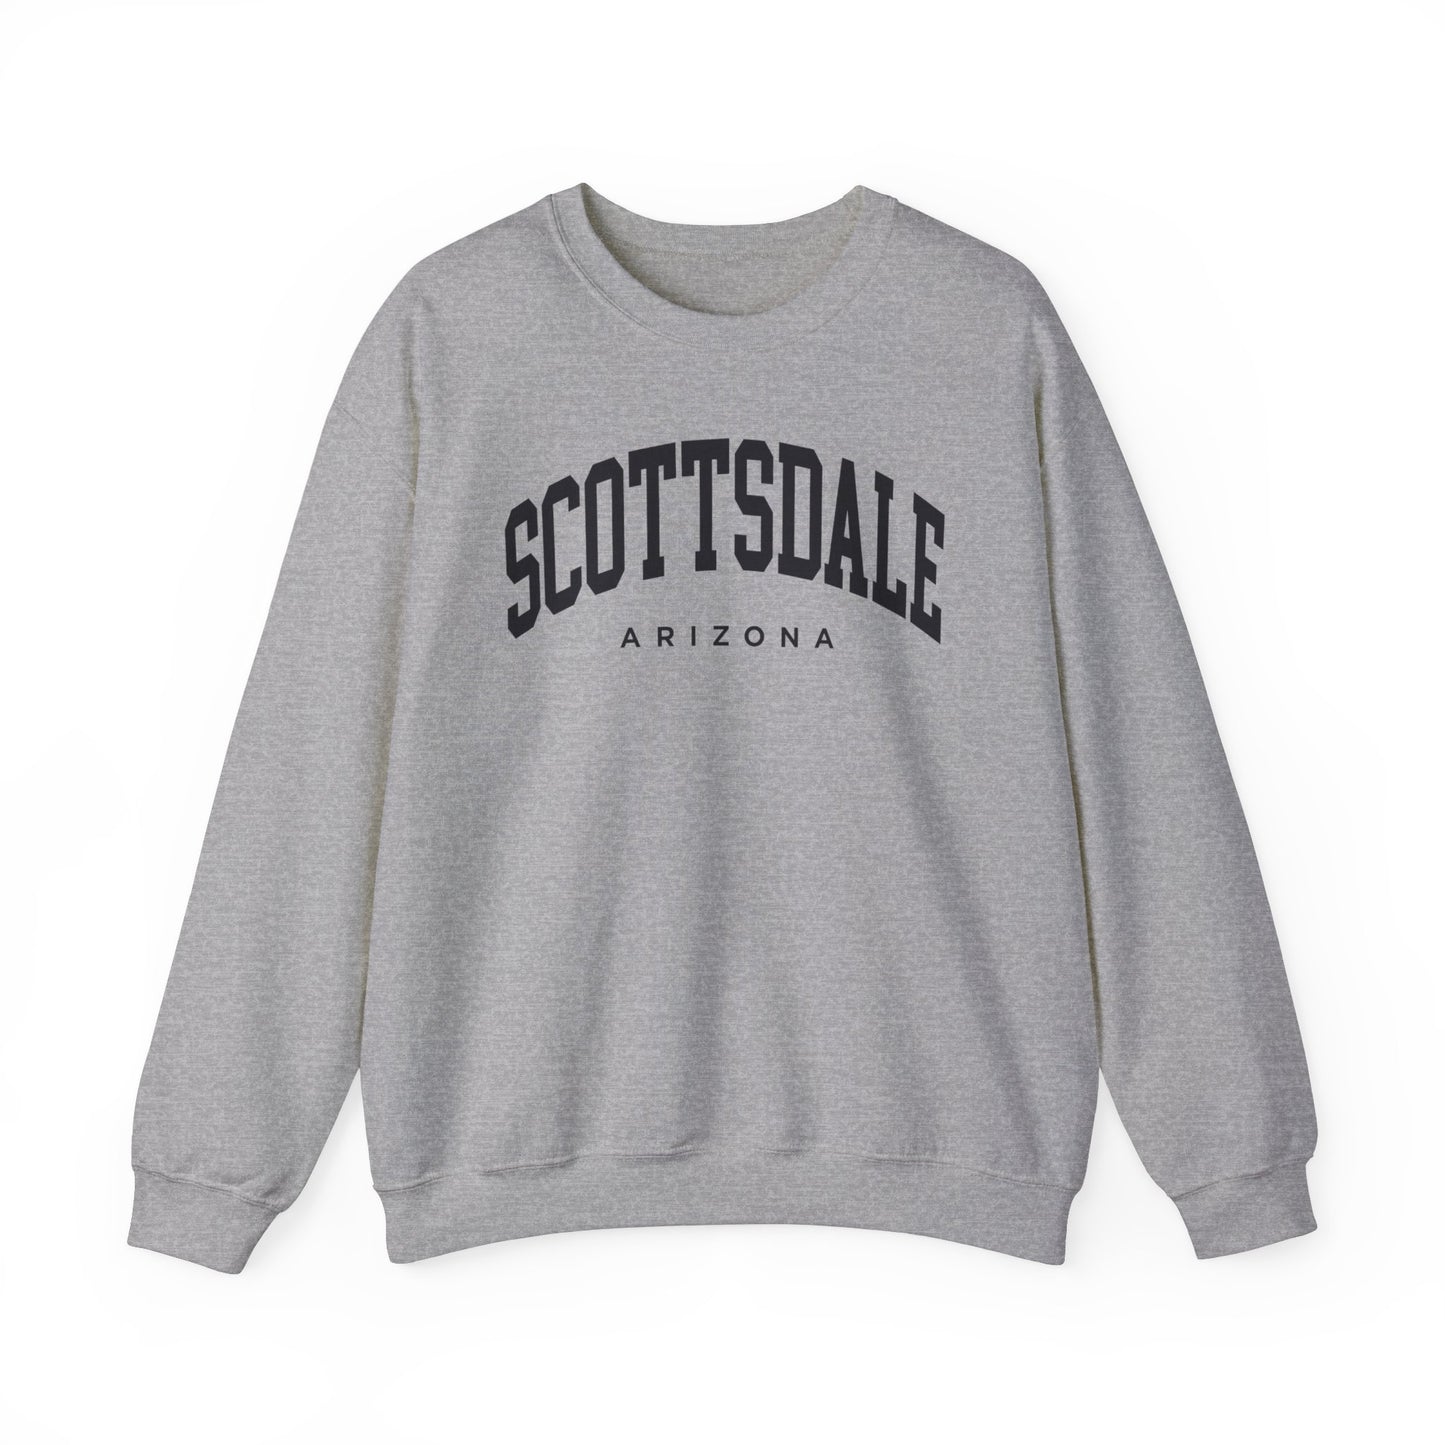 Scottsdale Arizona Sweatshirt